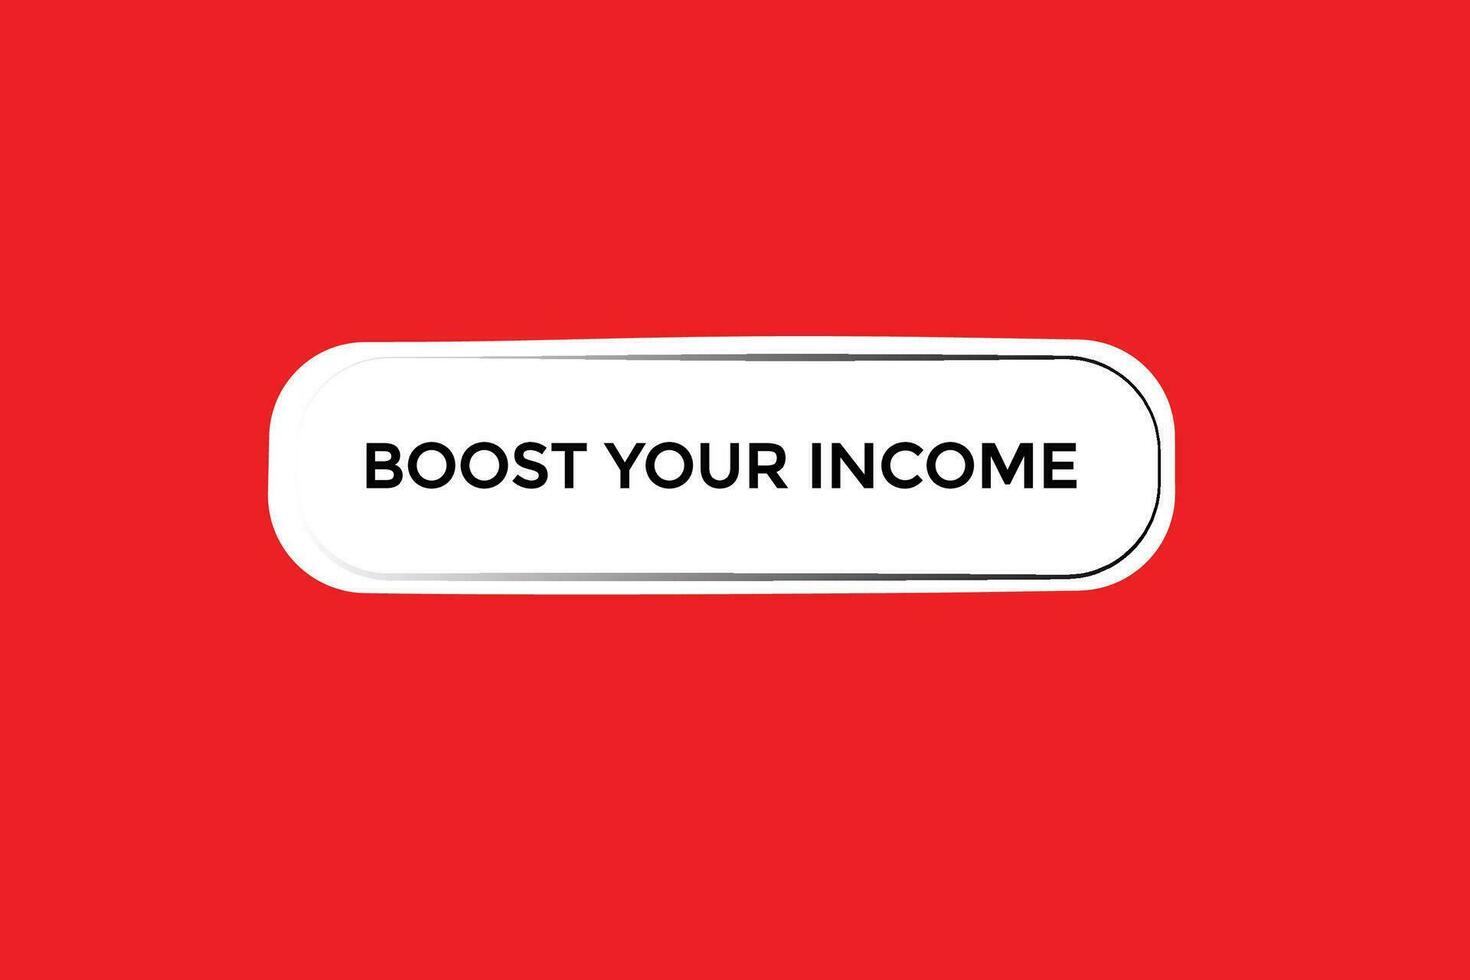 nuevo aumentar tu ingresos moderno, sitio web, hacer clic botón, nivel, firmar, discurso, burbuja bandera, vector